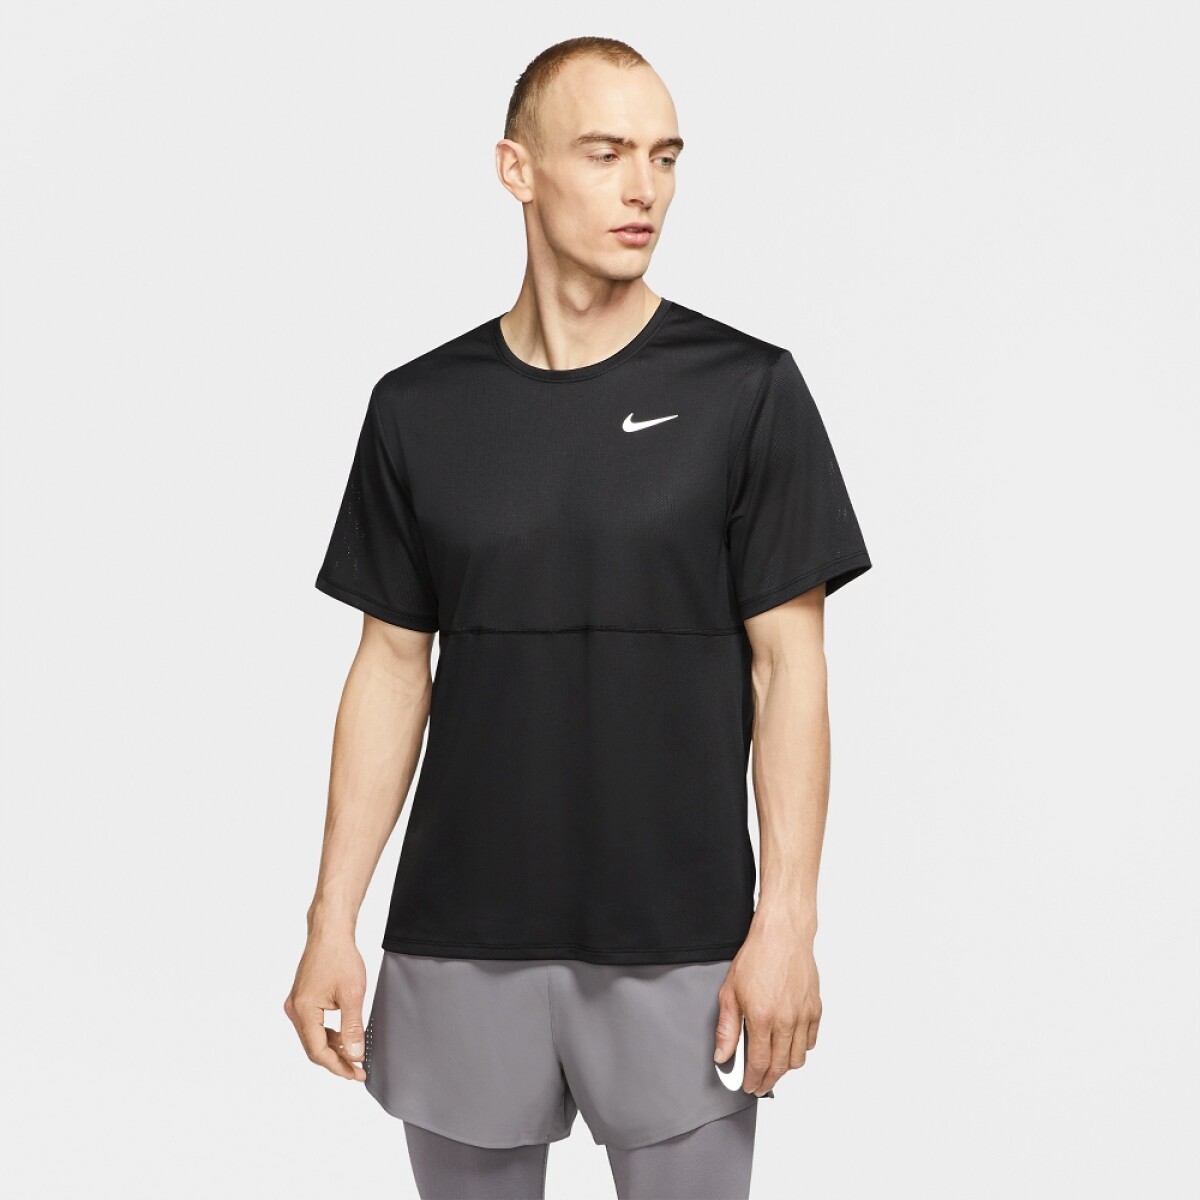 Remera Nike Running Hombre run - Color Único 